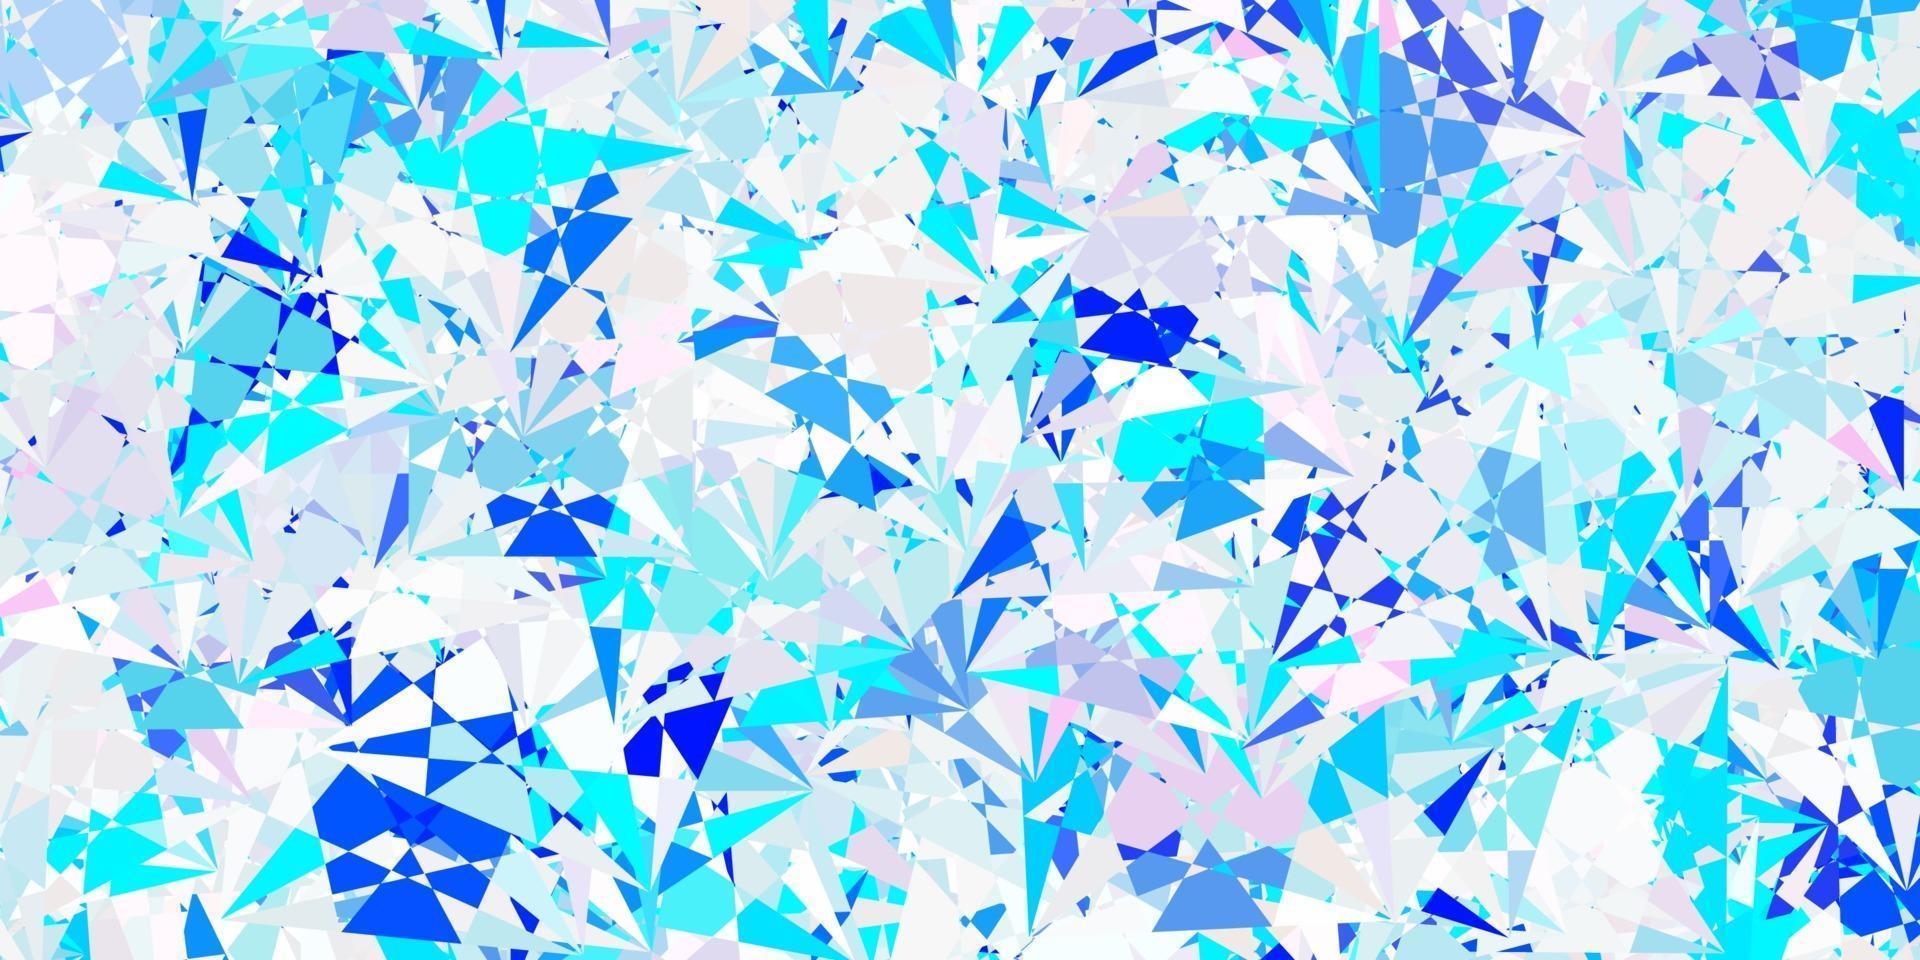 ljusrosa, blå vektorbakgrund med polygonala former. vektor